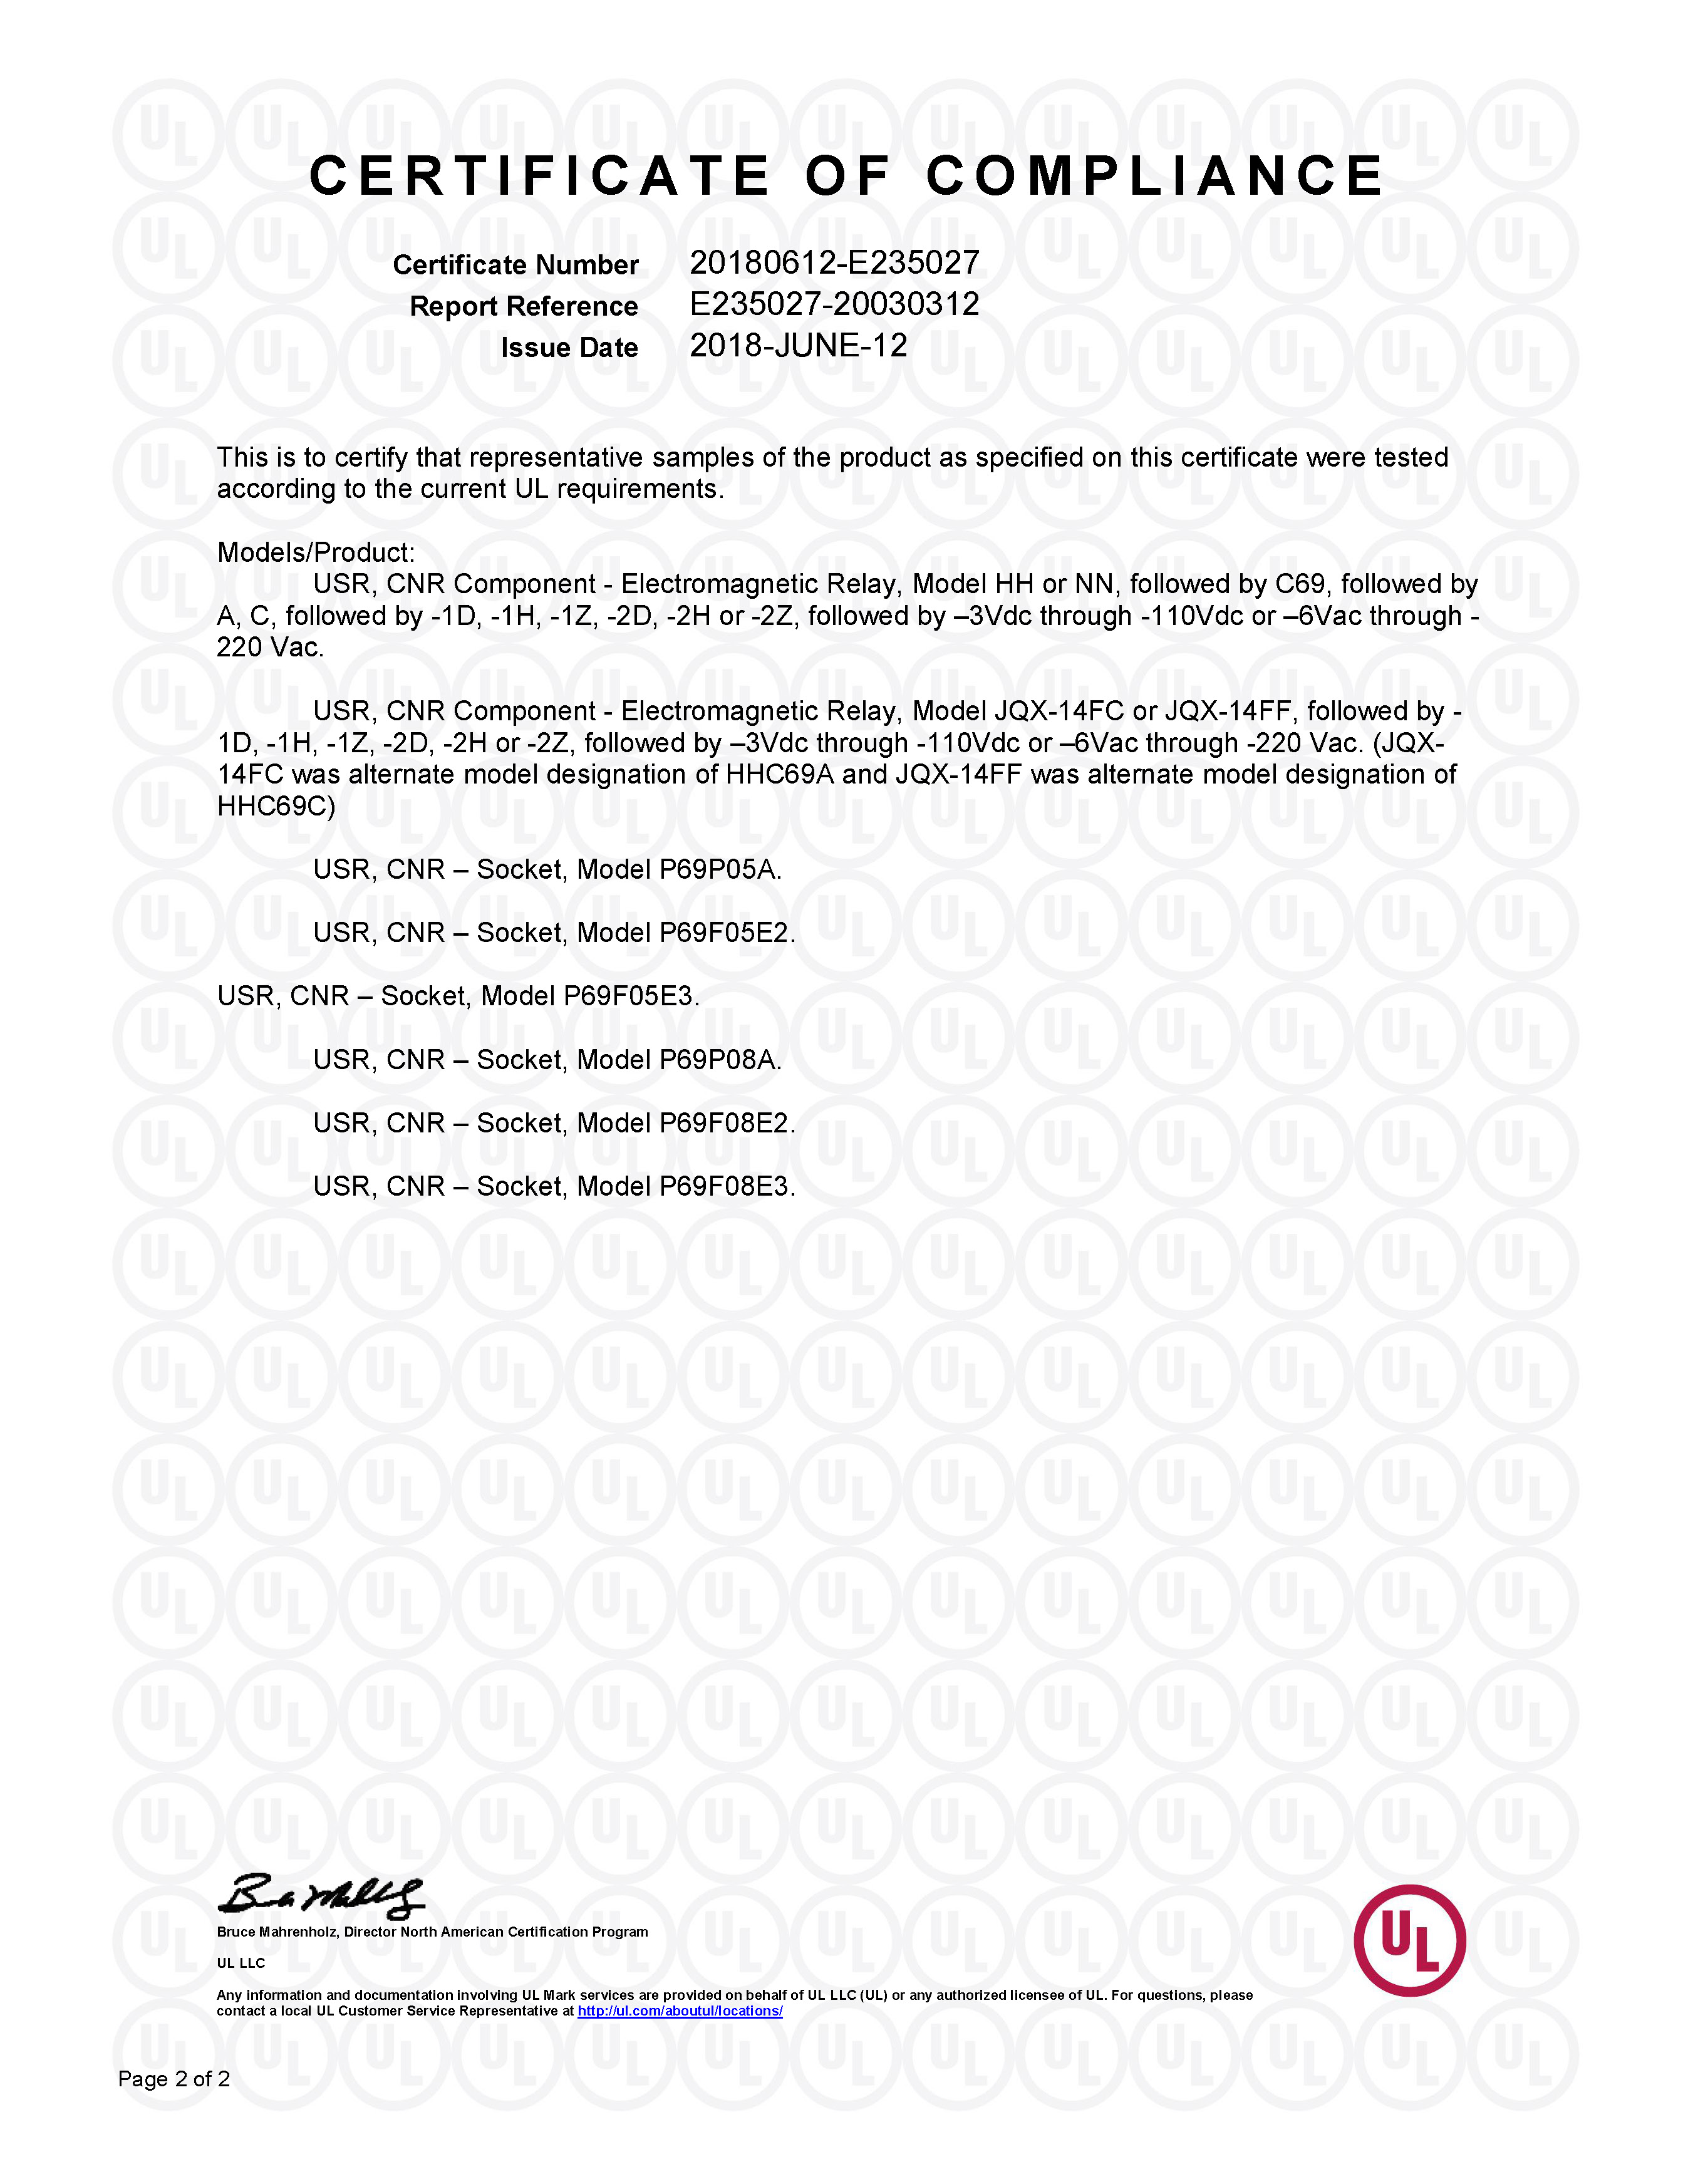 E235027-20030312-CertificateofCompliance_页面_2